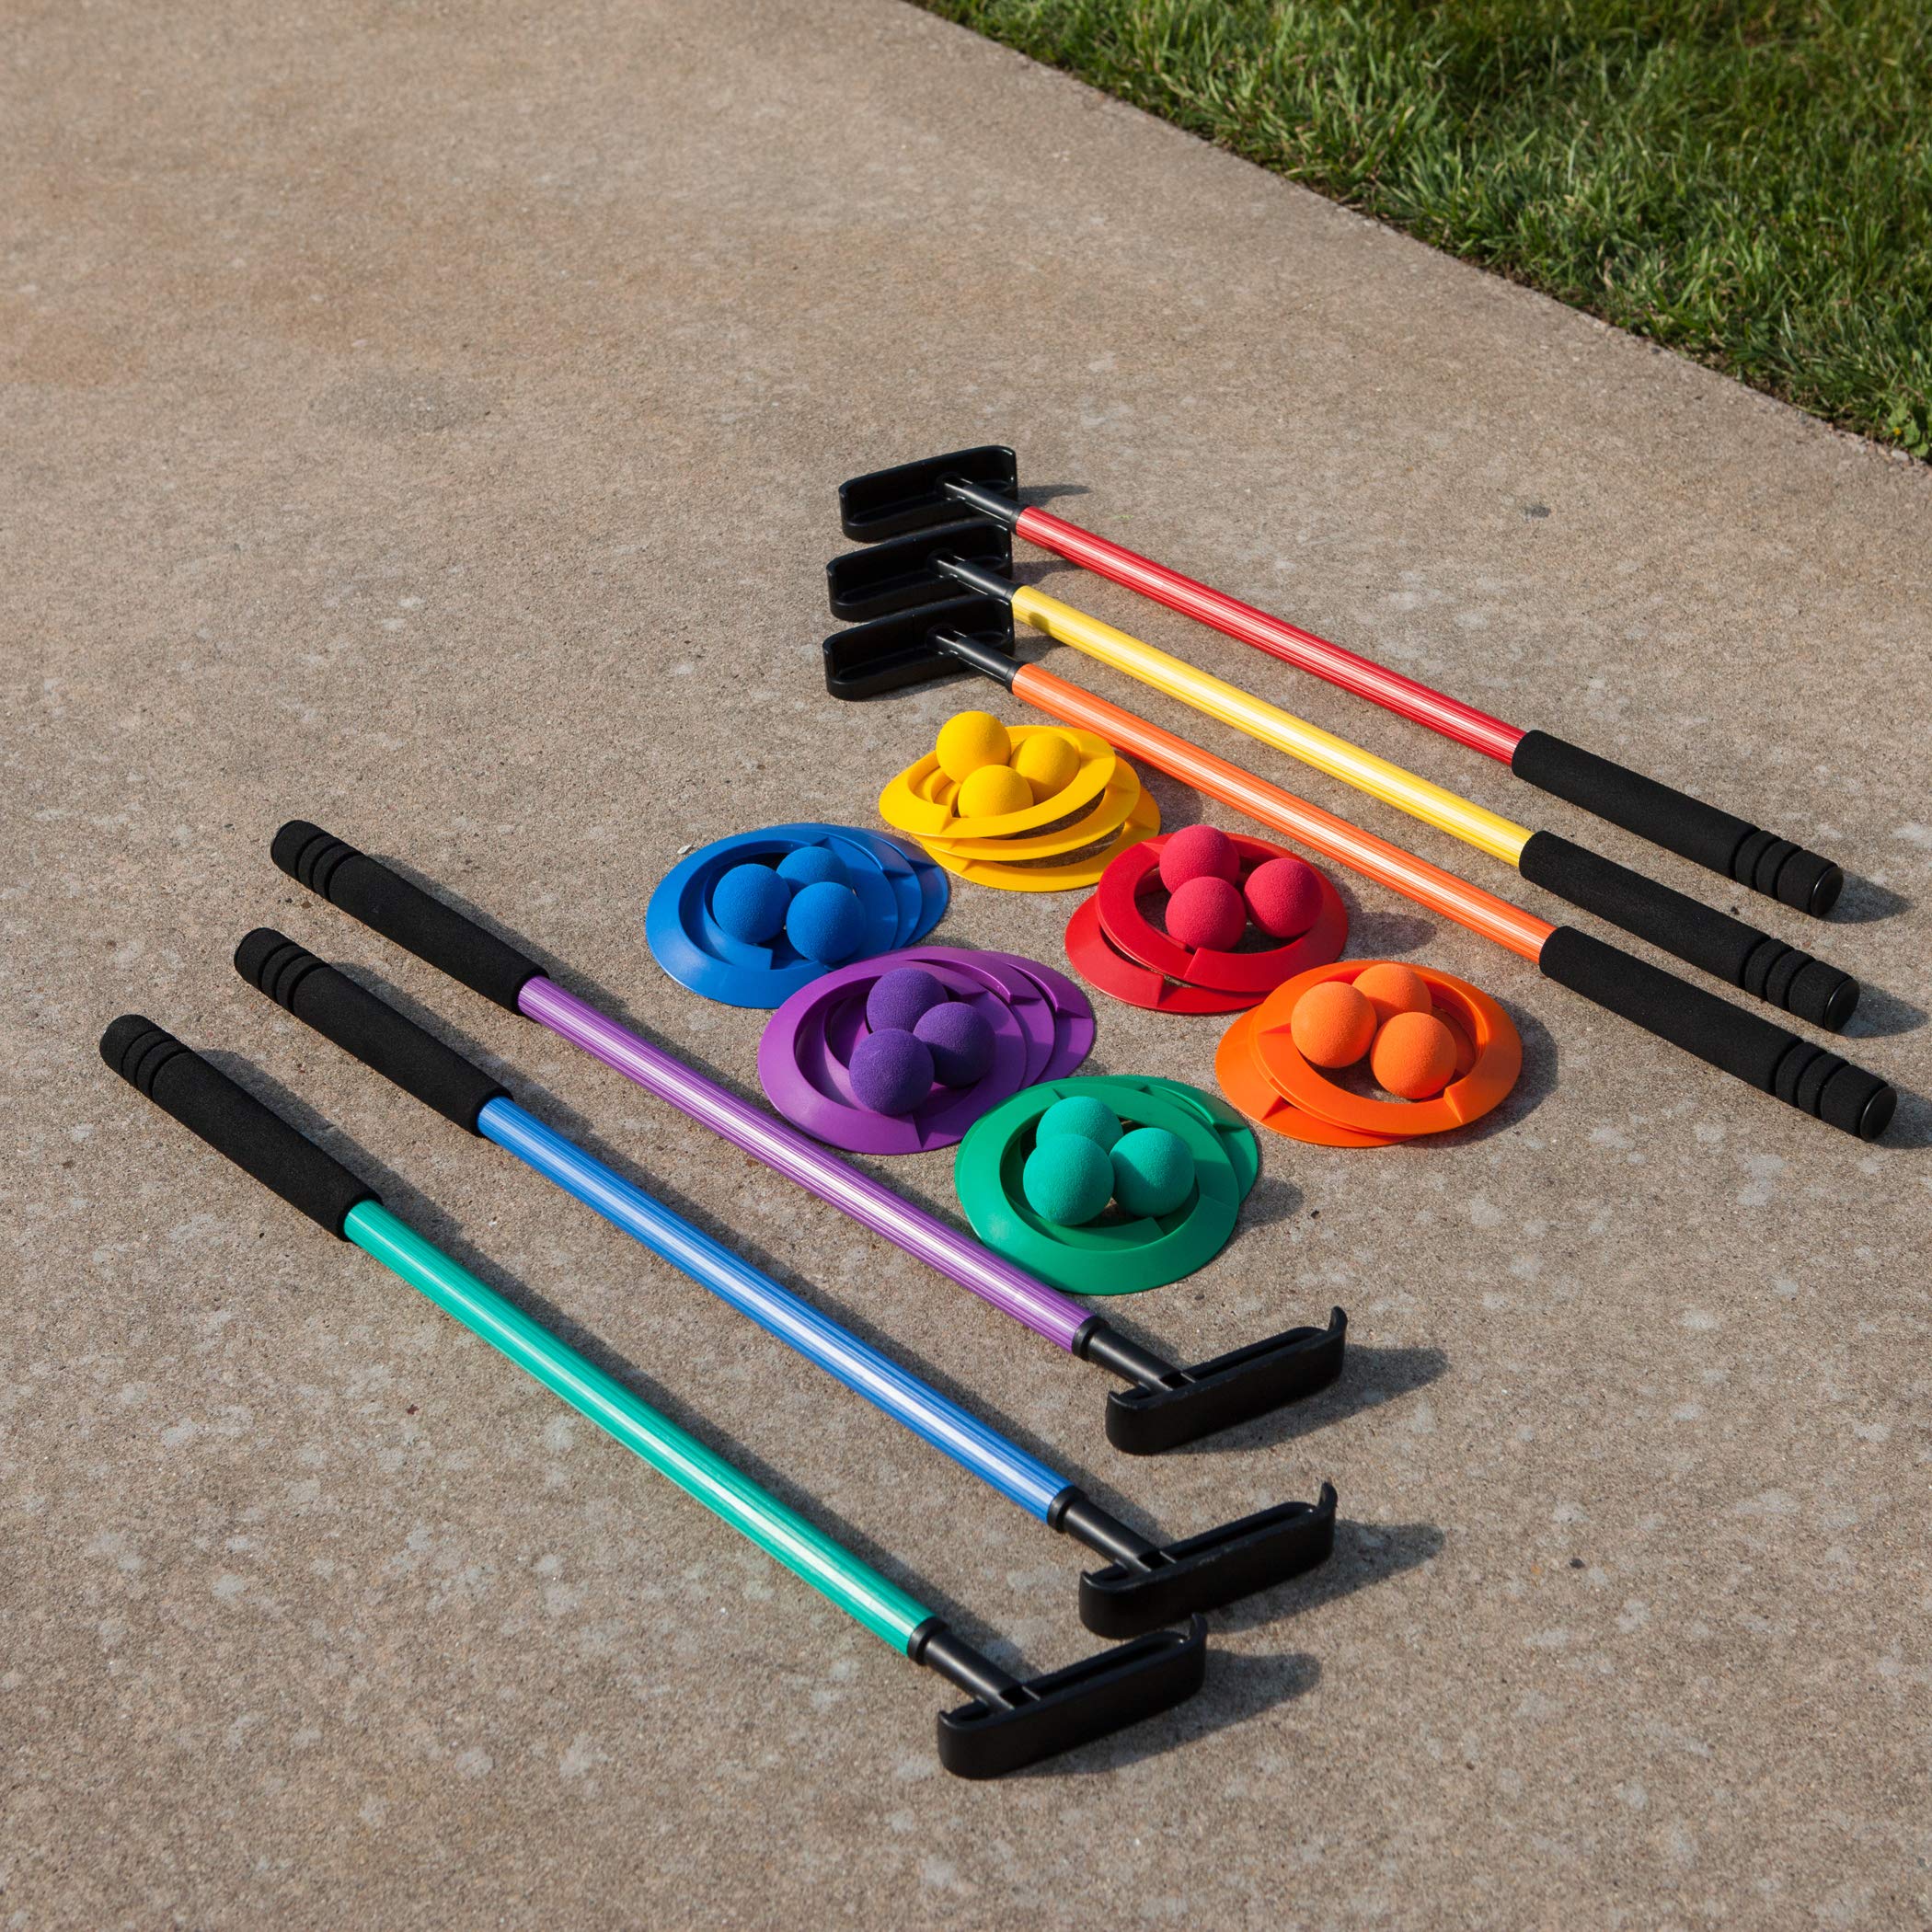 Champion Sports Mini Golf Clubs: Multi Colored Putt Putt Miniature Golfing Set for Kids - 6 Putters 18 Holes & 18 Balls